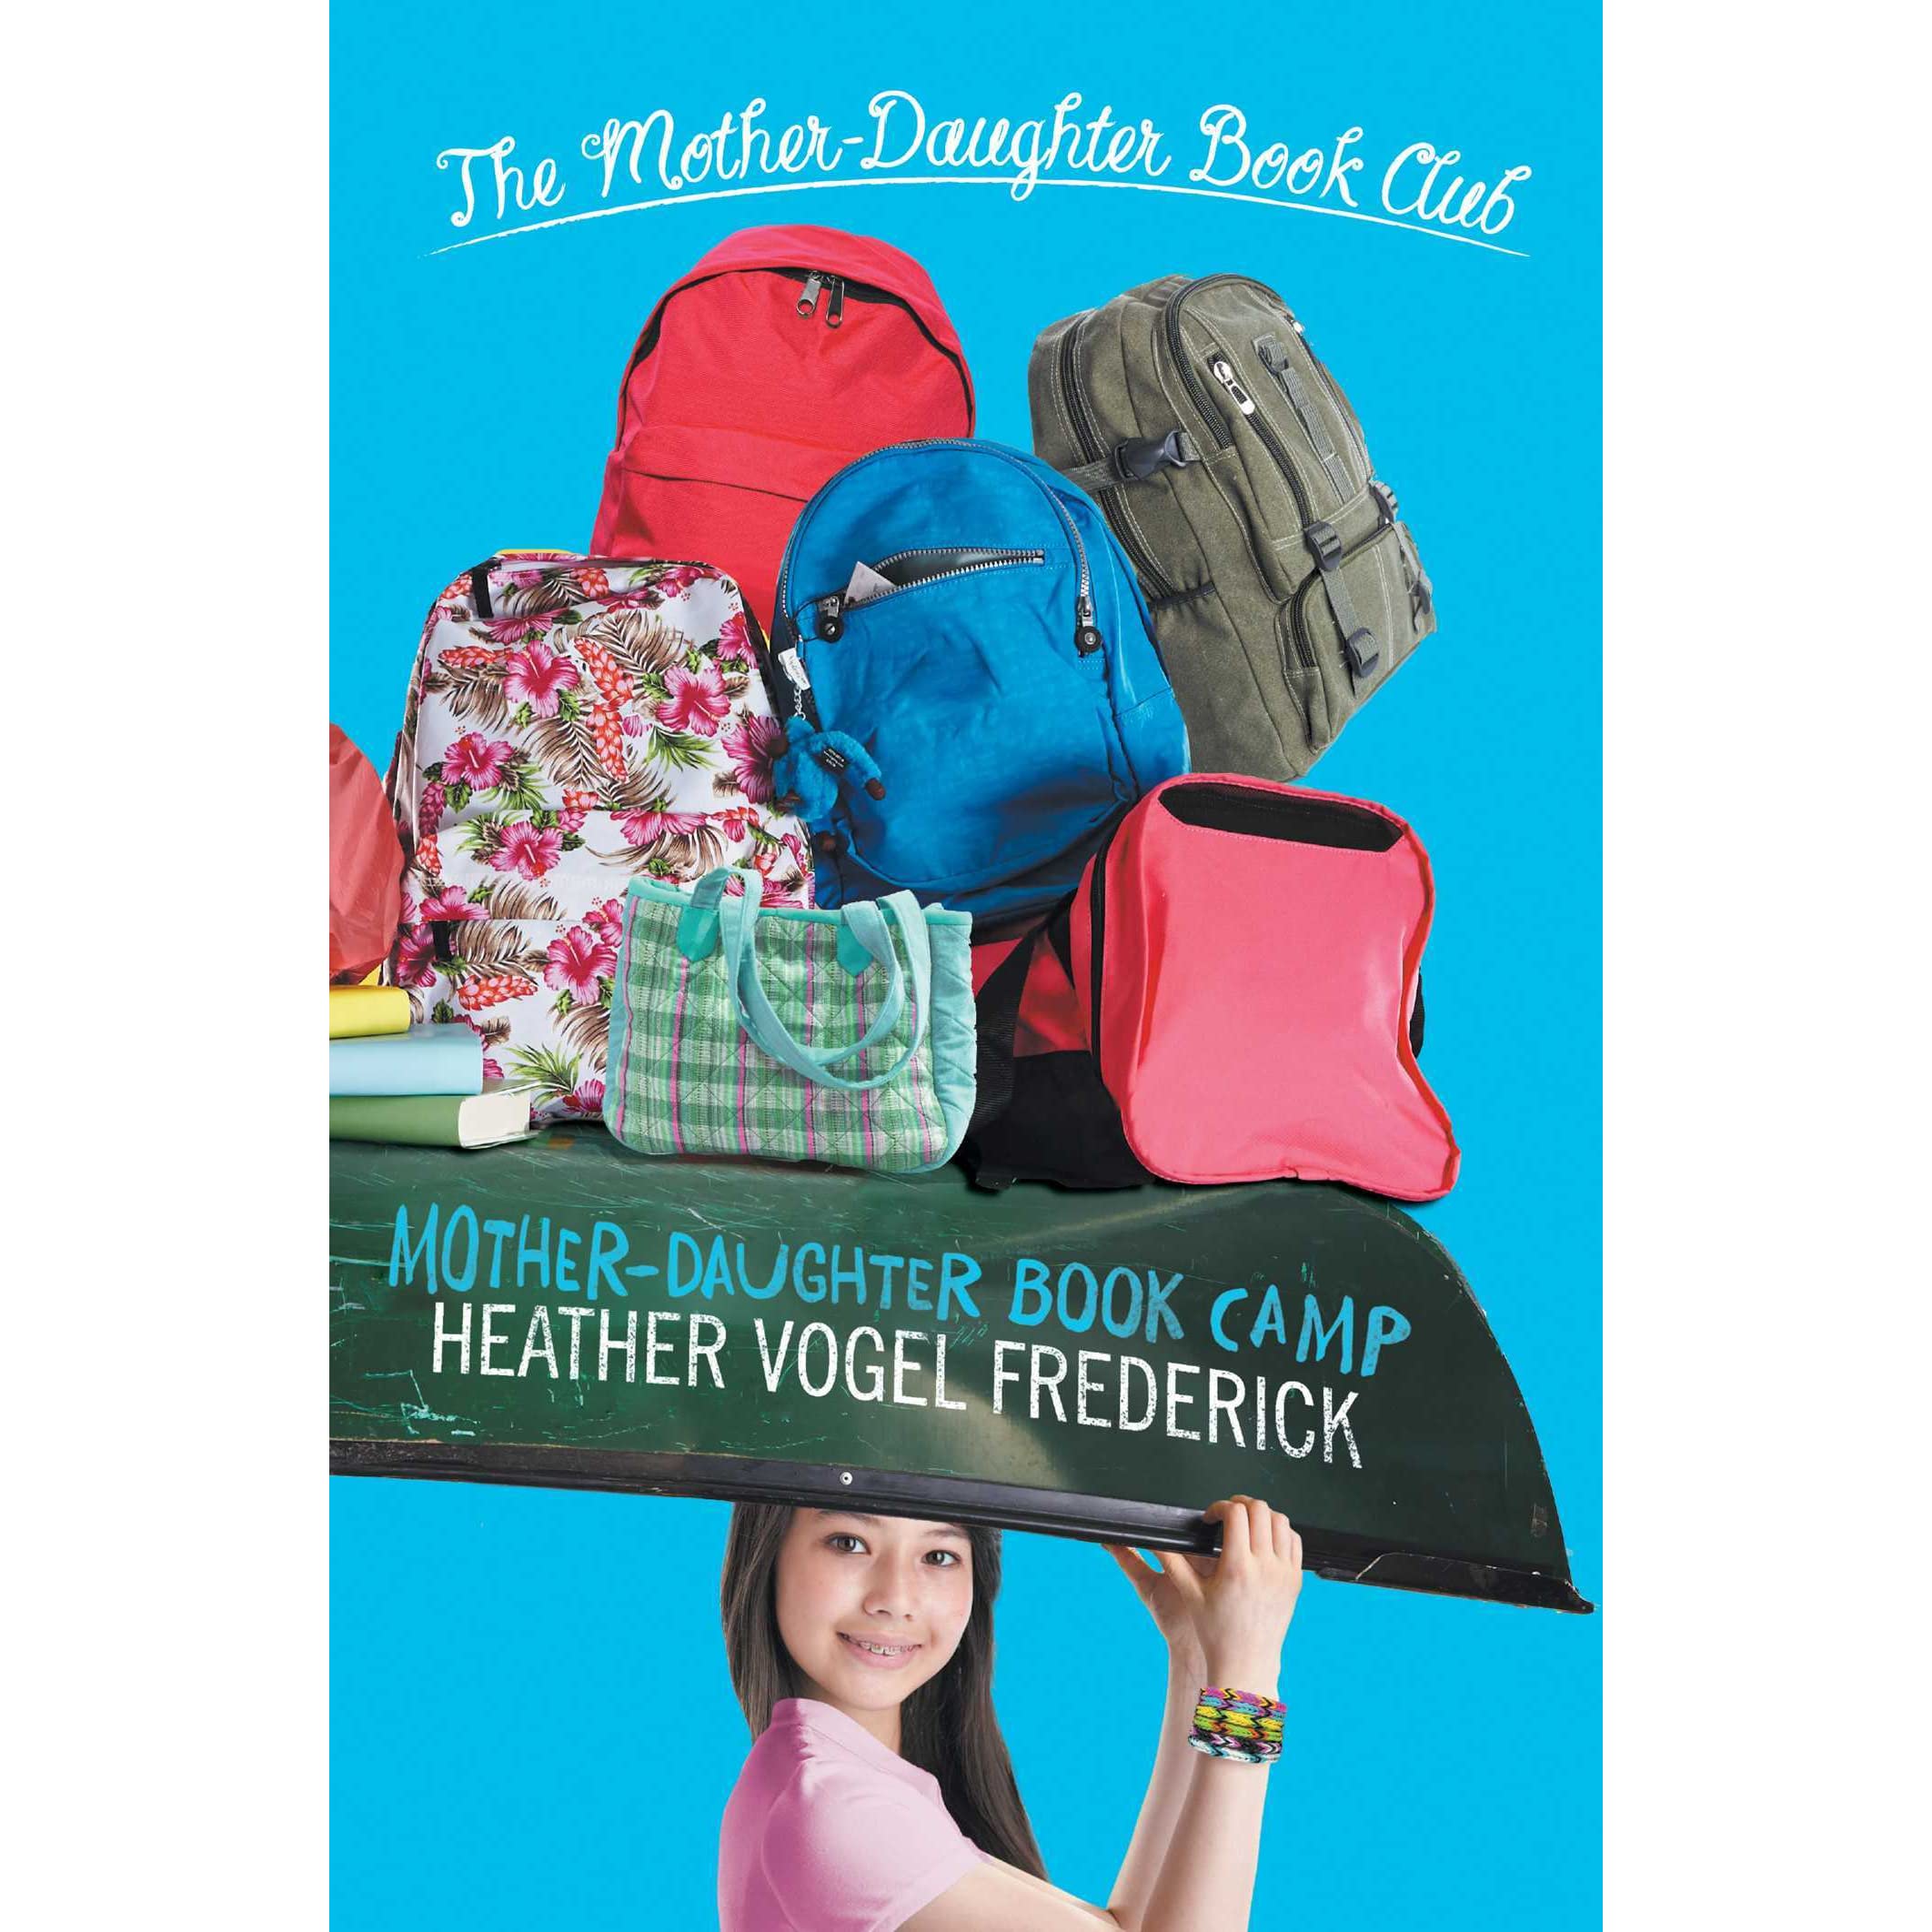 Mother- Daughter Book Camp